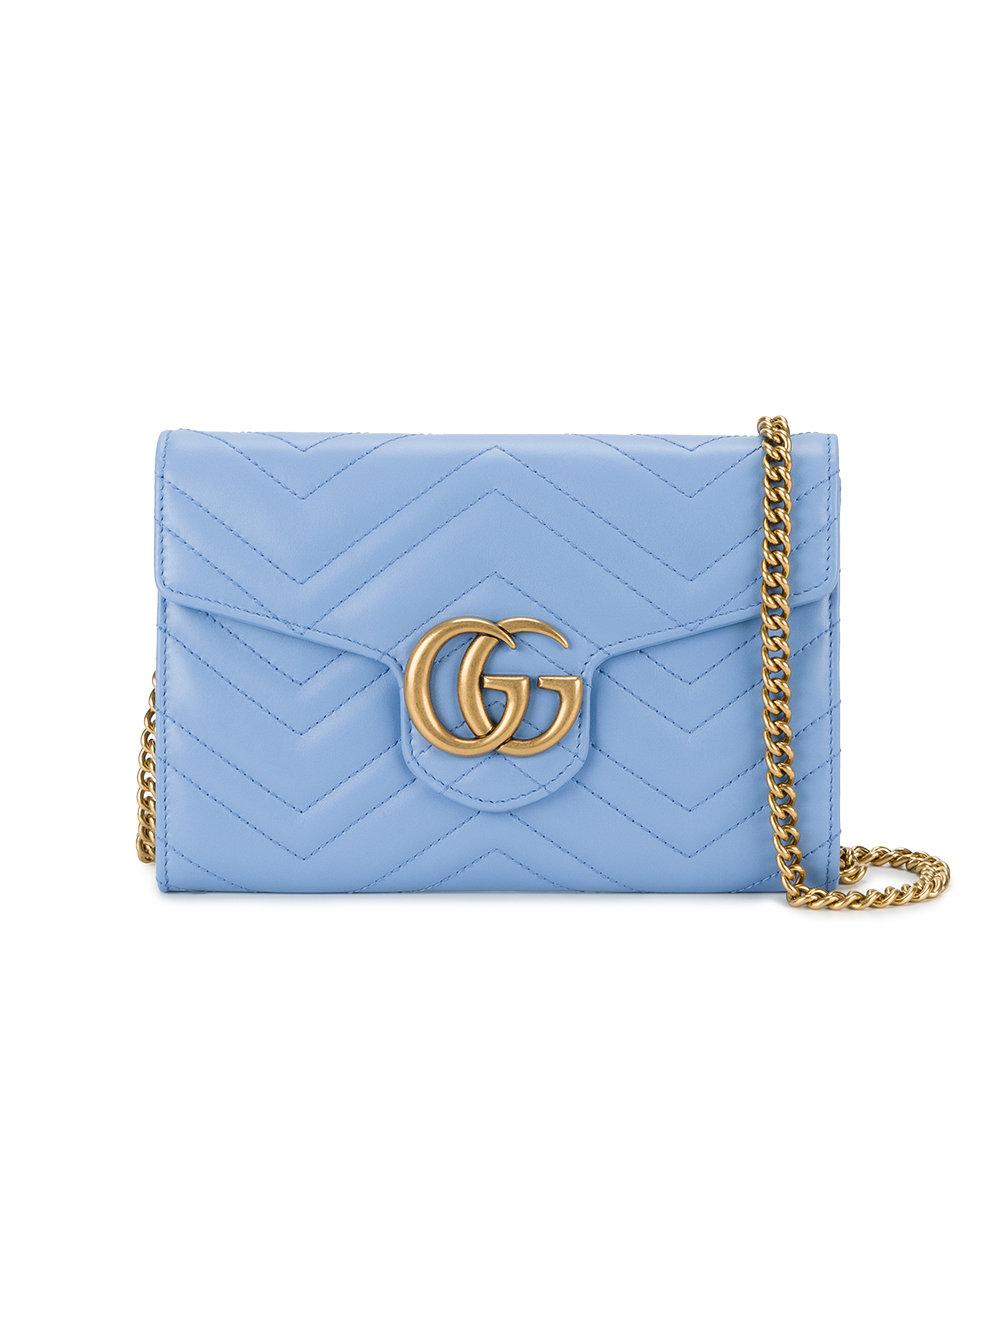 Lyst - Gucci Gg Marmont Matelassé Bag in Blue